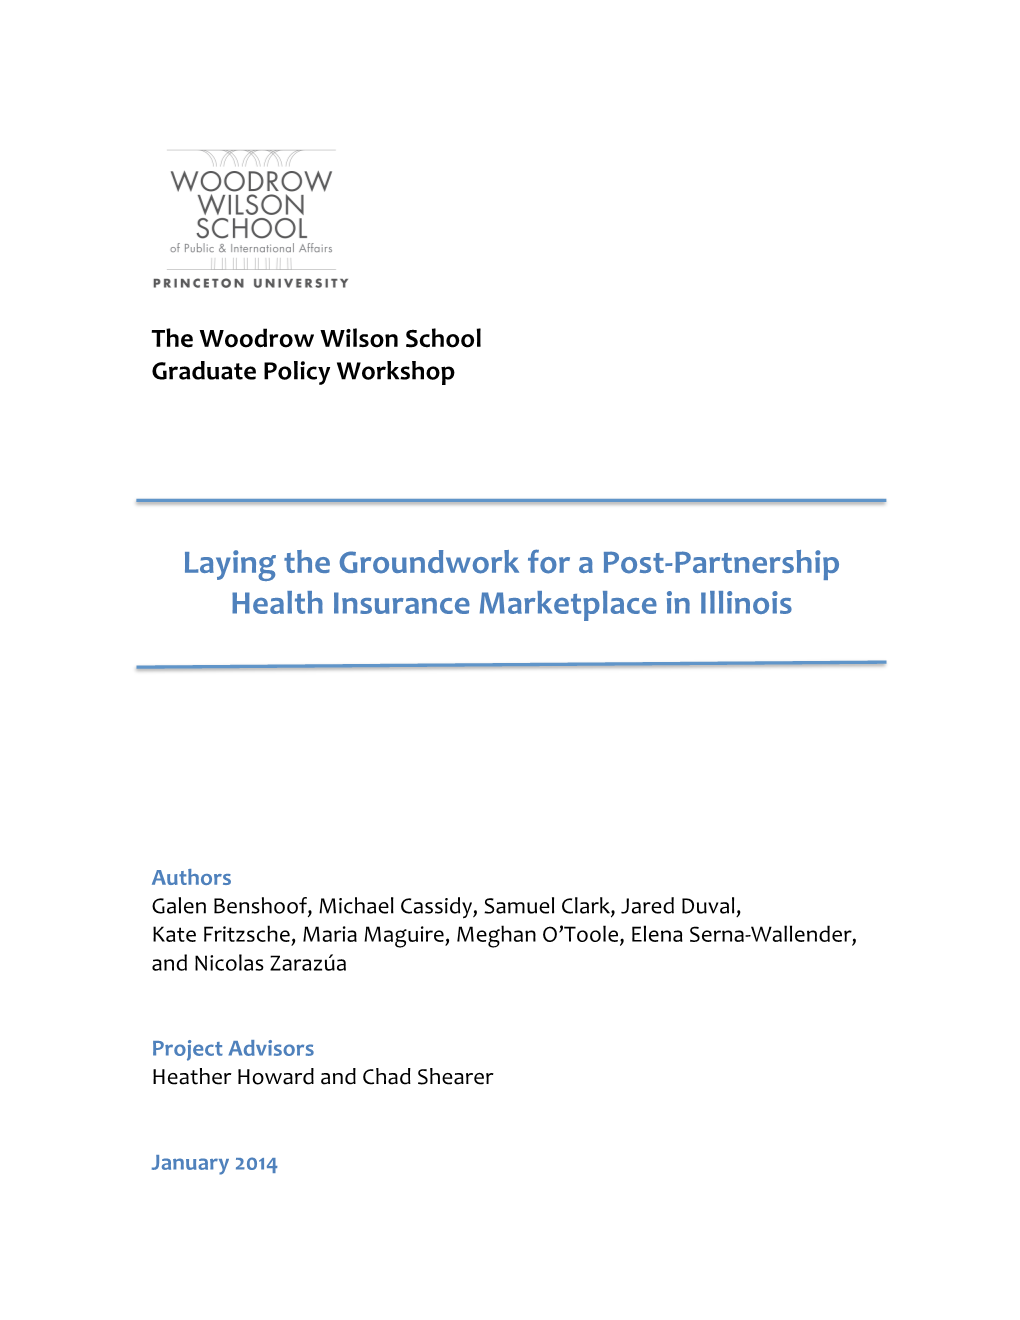 Partnership Health Insurance Marketplace in Illinois